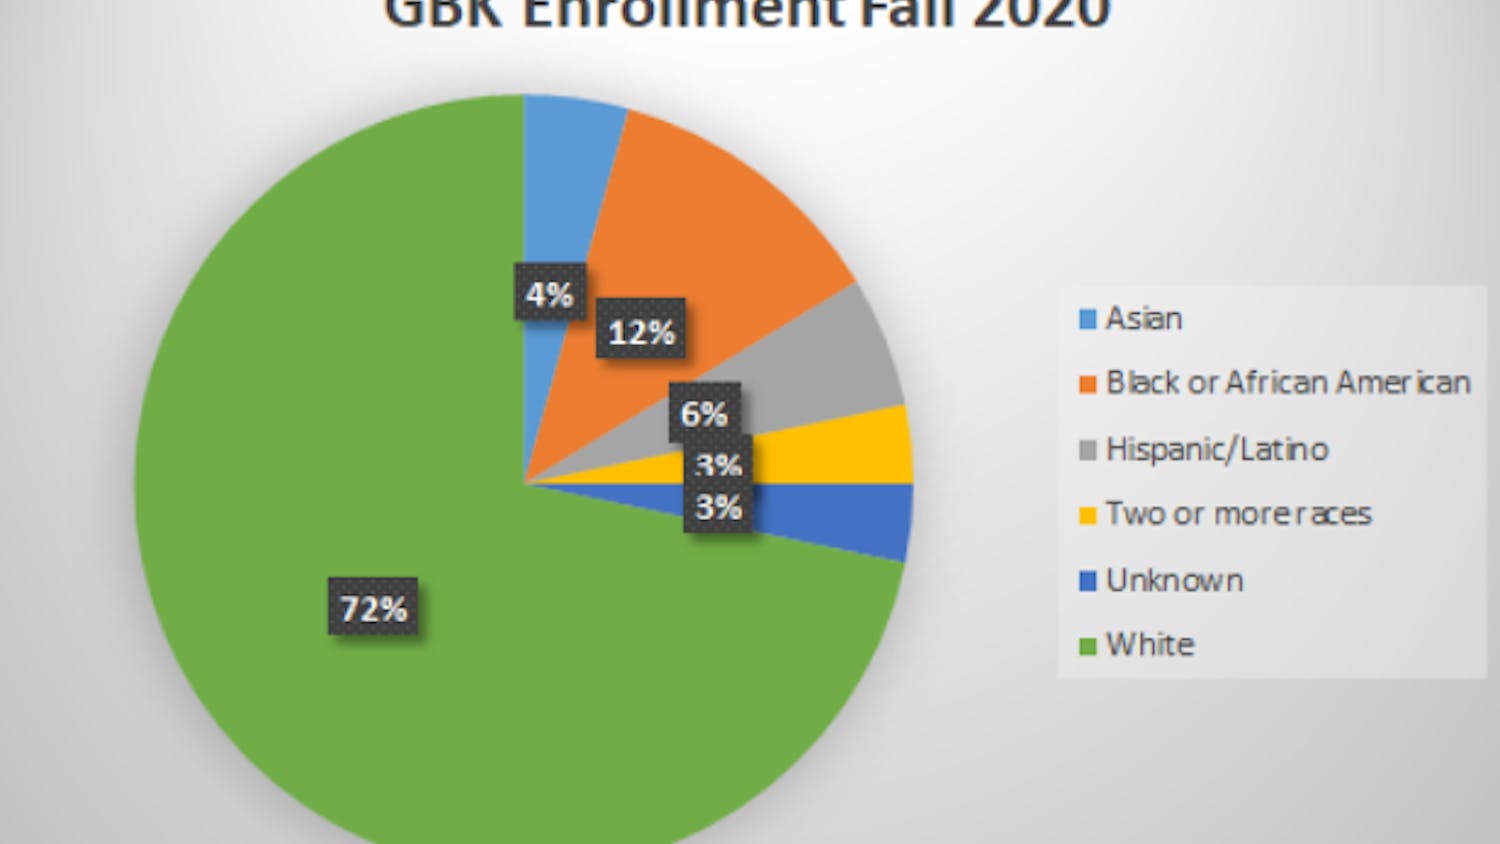 GBK enrollment chart.png